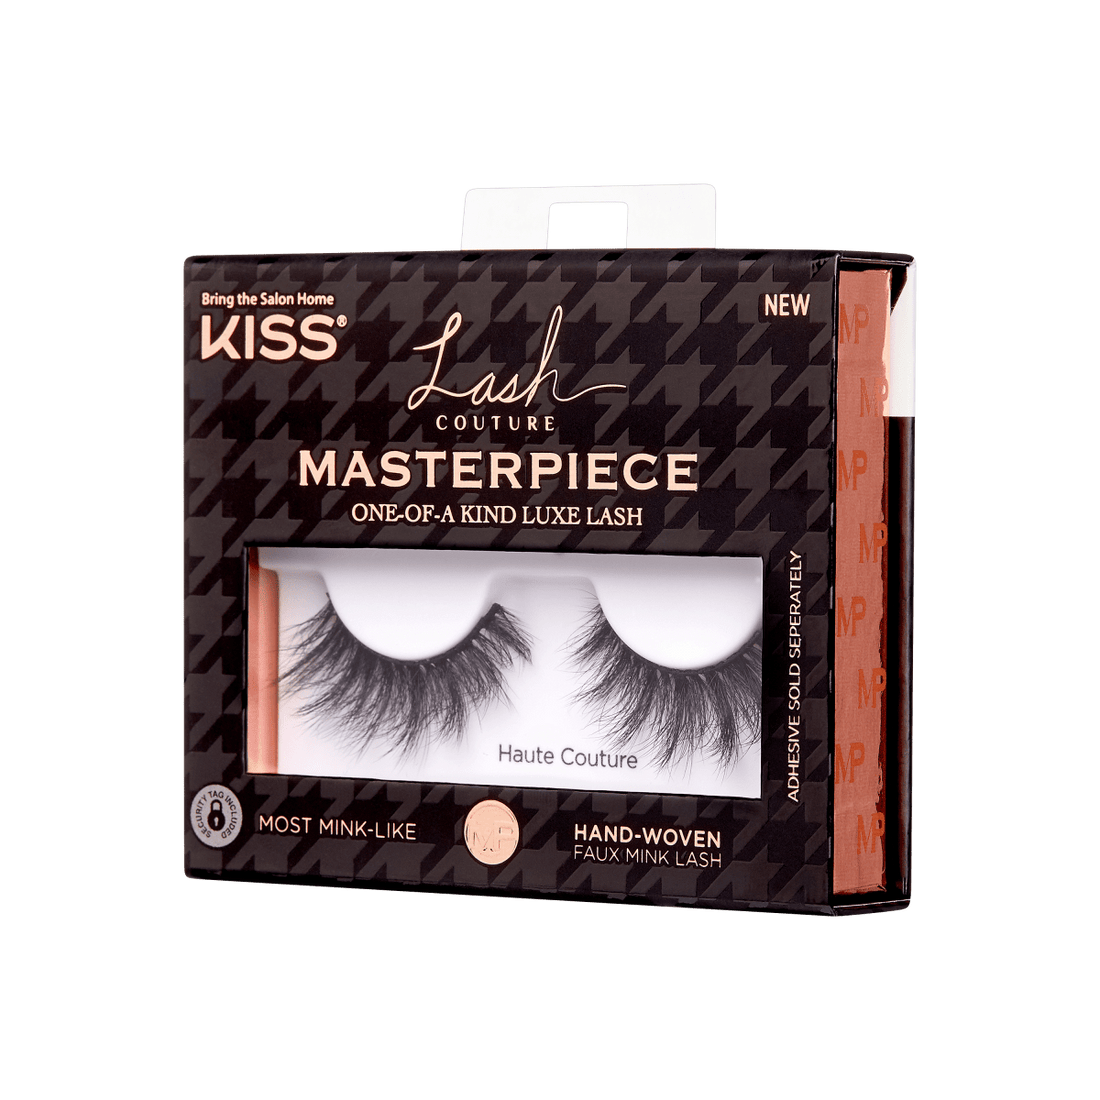 KISS Masterpiece, False Eyelashes, Haute Couture, 16mm, 1 Pair